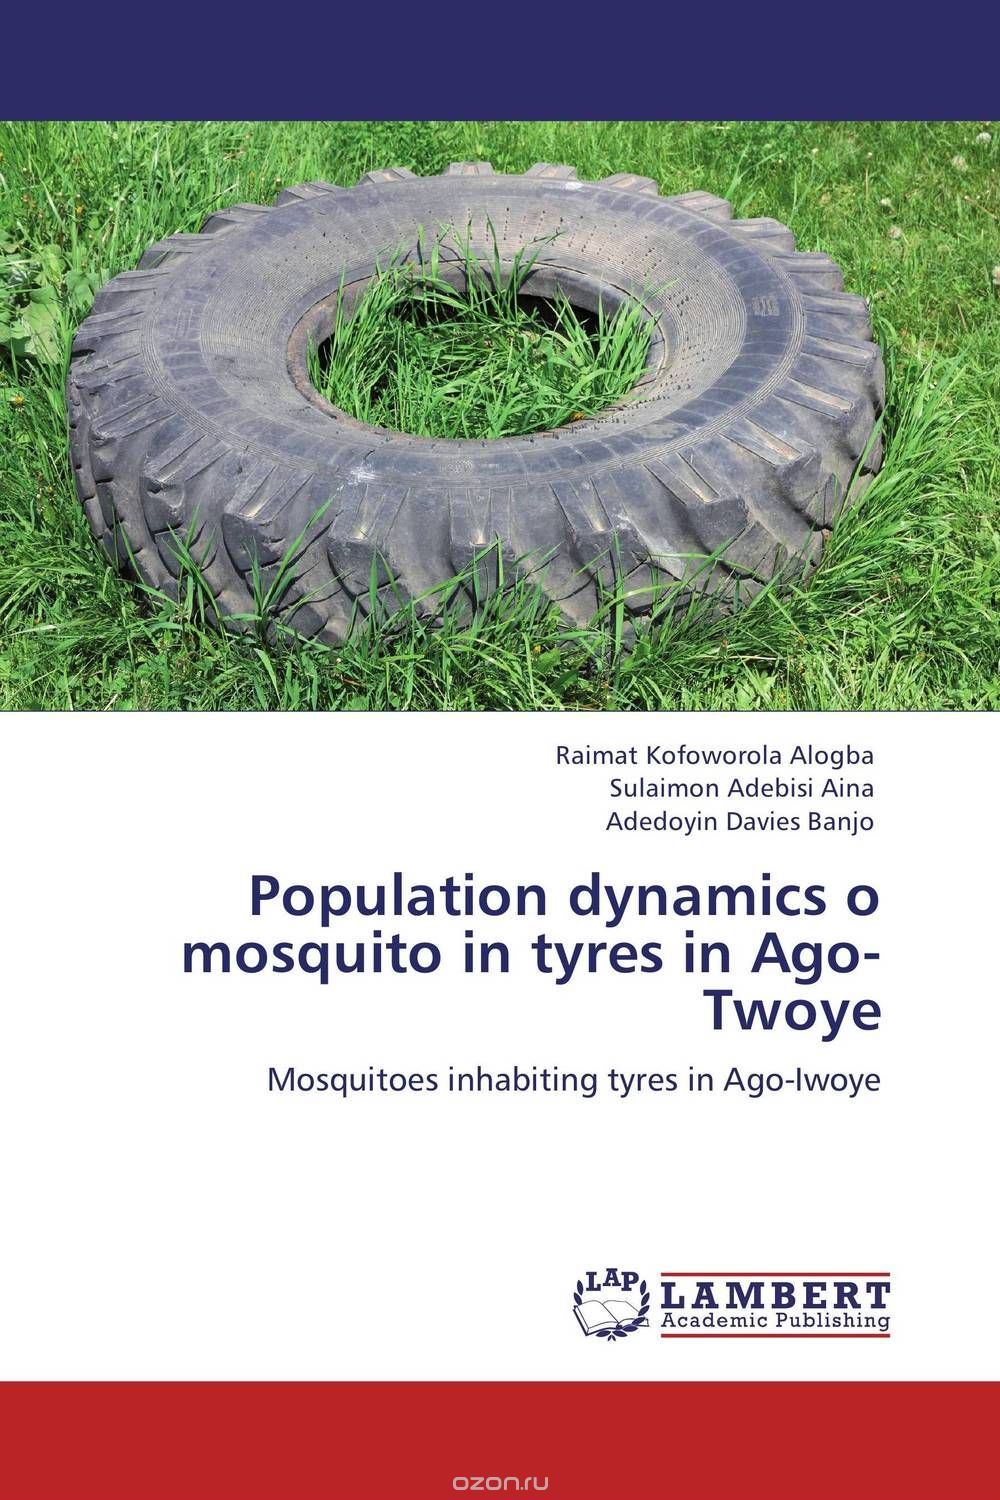 Скачать книгу "Population dynamics o mosquito in tyres in Ago-Twoye"